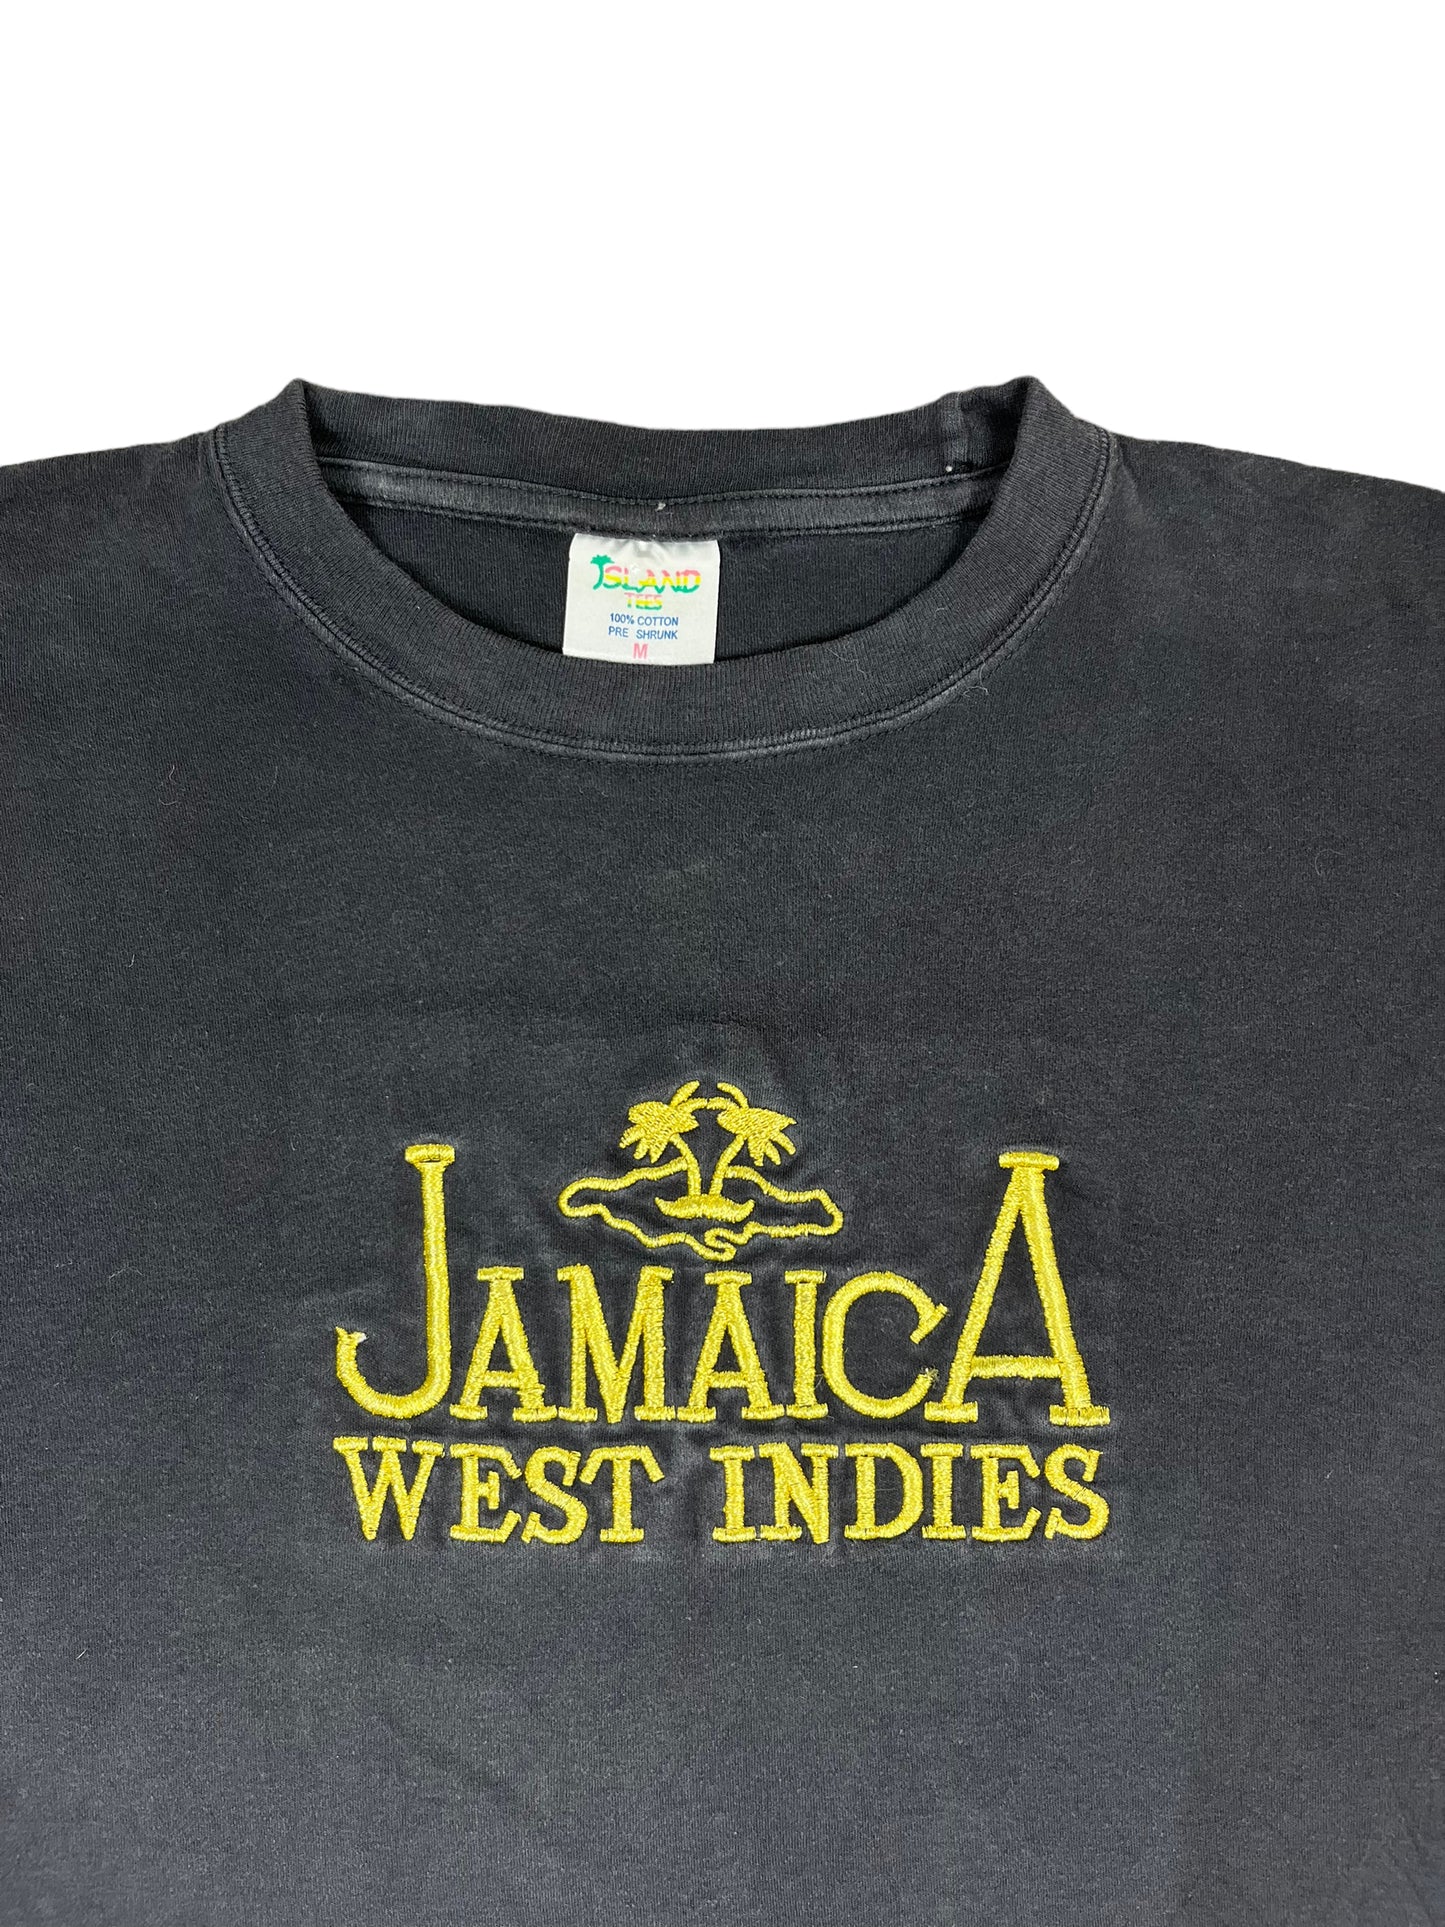 Vintage 80’s Jamaica T Shirt -  Medium